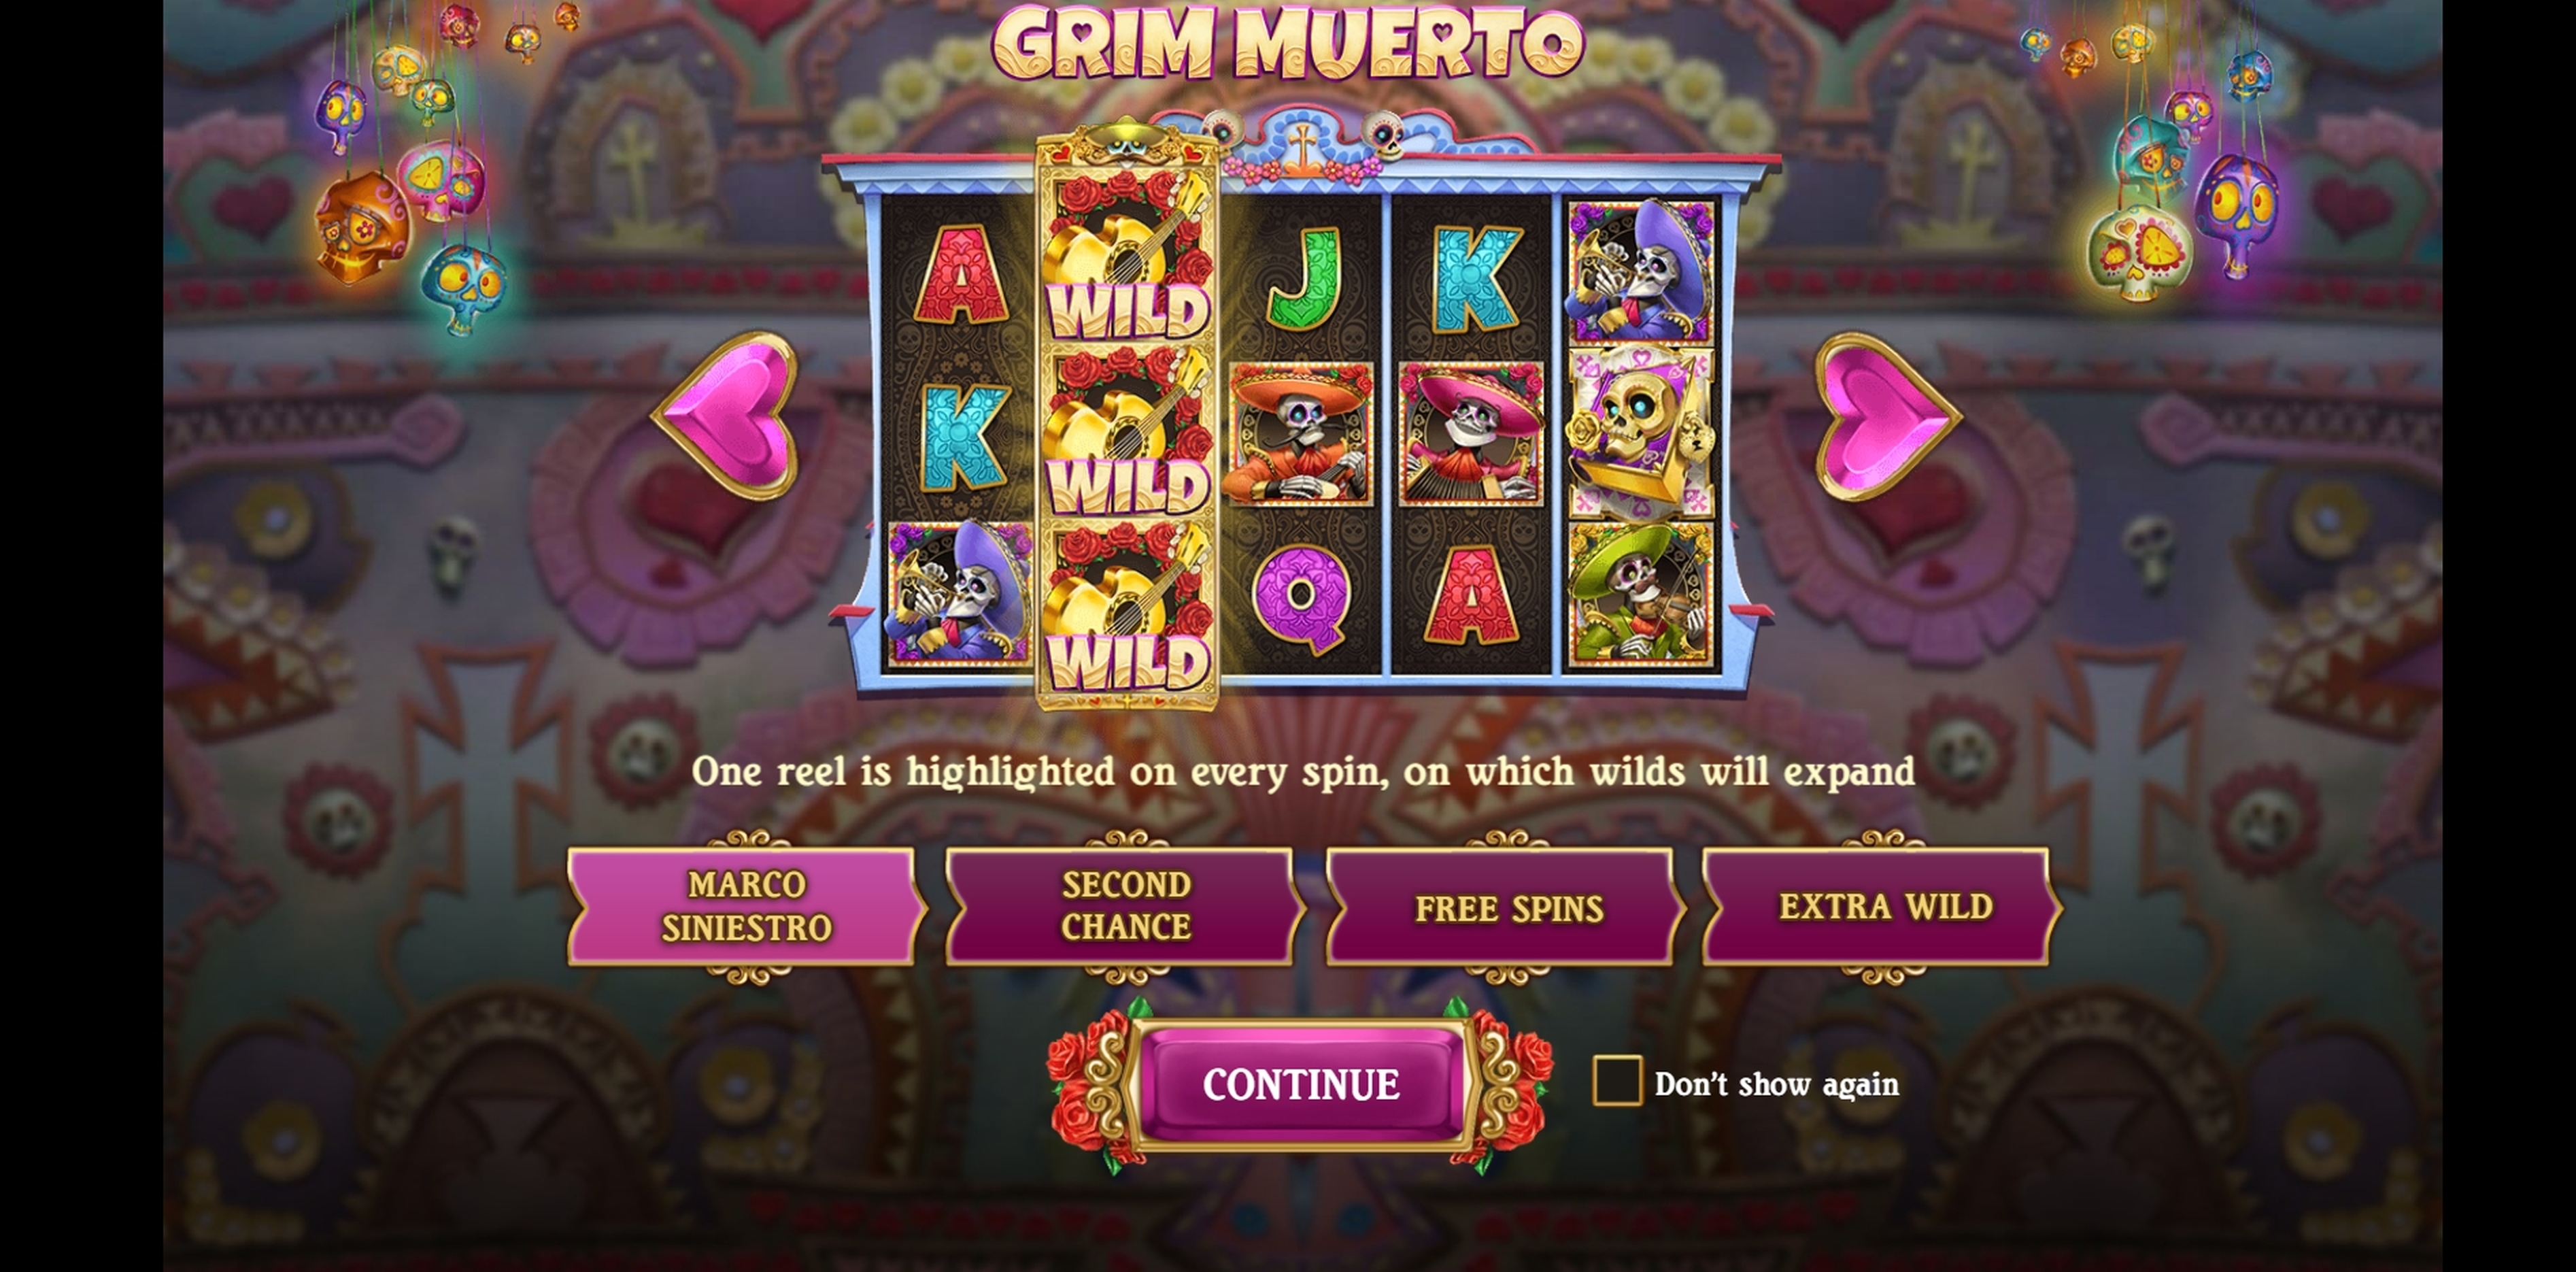 Play Grim Muerto Free Casino Slot Game by Playn GO